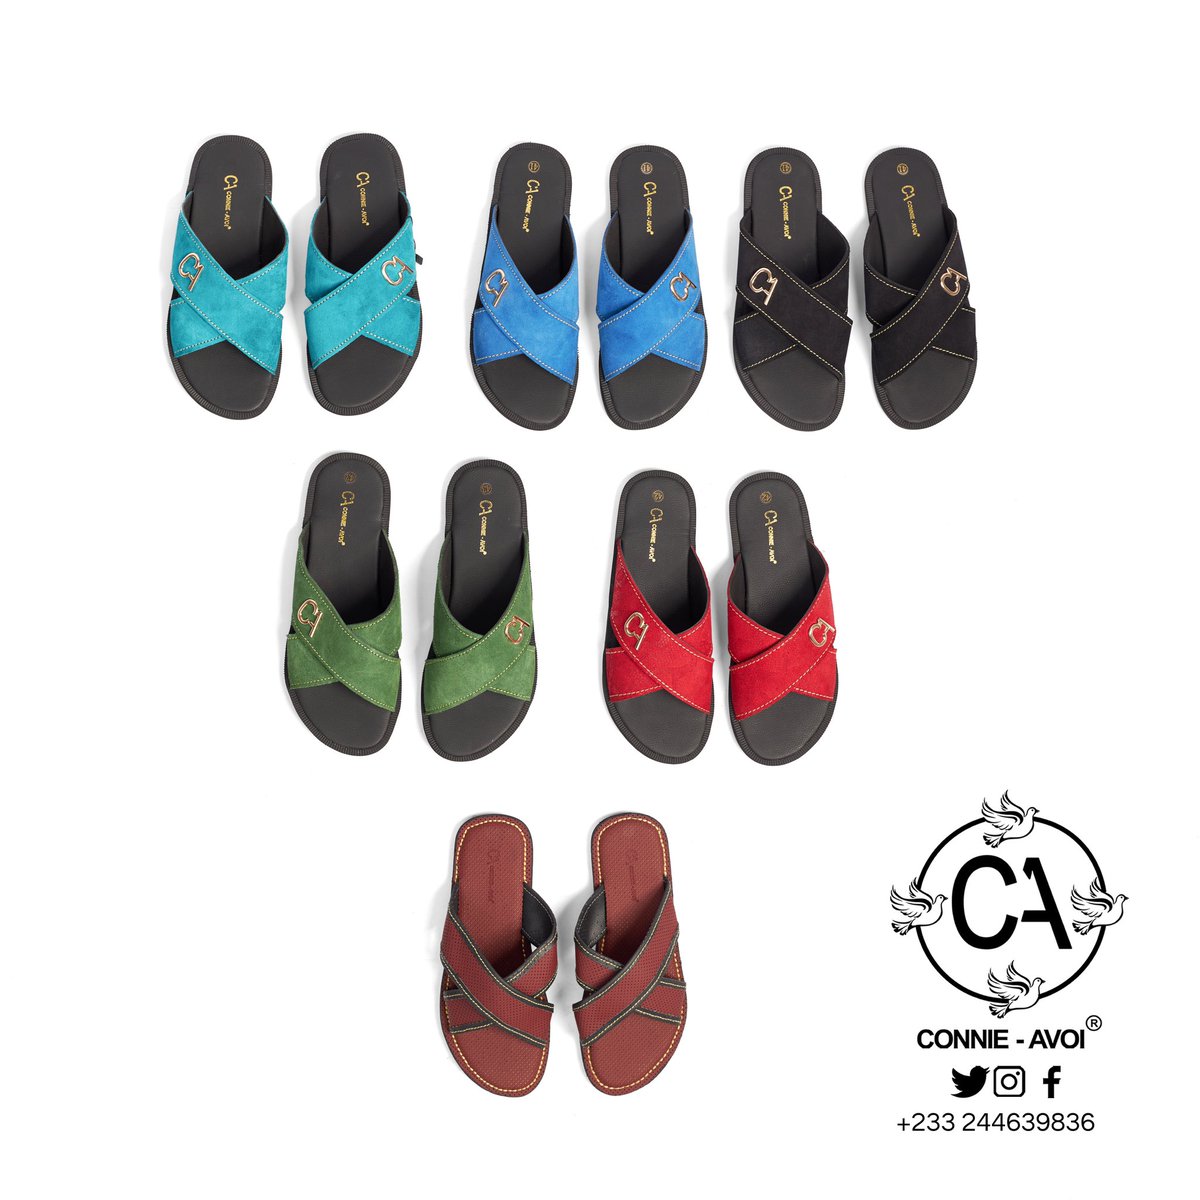 Connie-Avoi Criss-Cross Sandals

Material: Suede Leather

🏷️: GHC200

➡️ Swipe through to see colors that complements your style. 

Sizes
EU-40 | EU-41 | EU-42 | EU-43 | EU-44 | EU-45 | EU-46

#madeinghana #wearghana #GhanaAt66